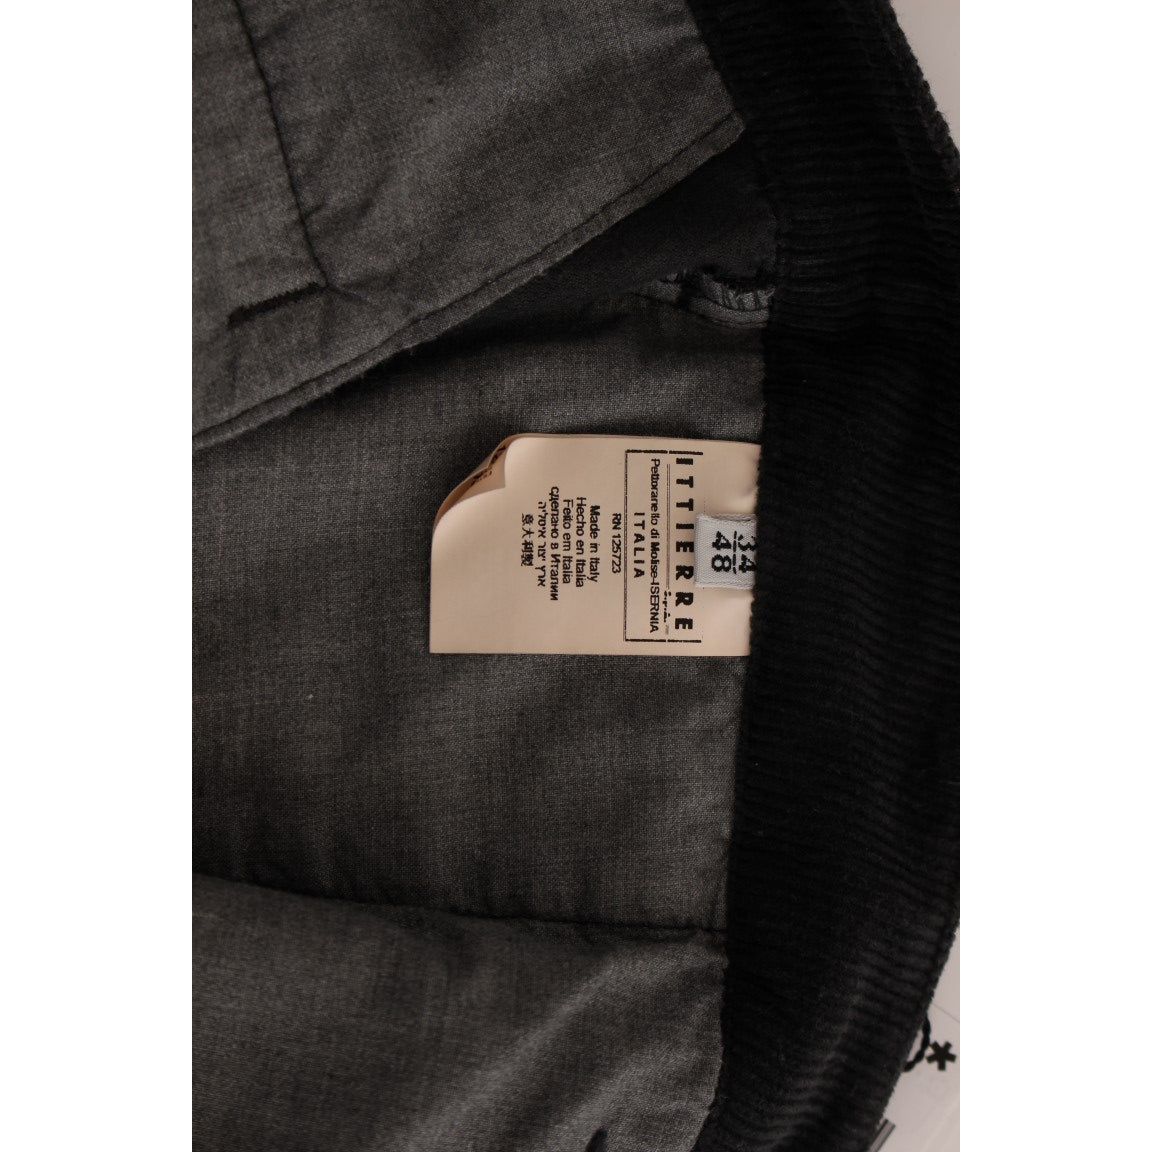 GF Ferre Elegant Black Cotton Corduroy Pants black-corduroy-cotton-straight-fit-pants Jeans & Pants 53278-black-corduroy-cotton-straight-fit-pants-7.jpg